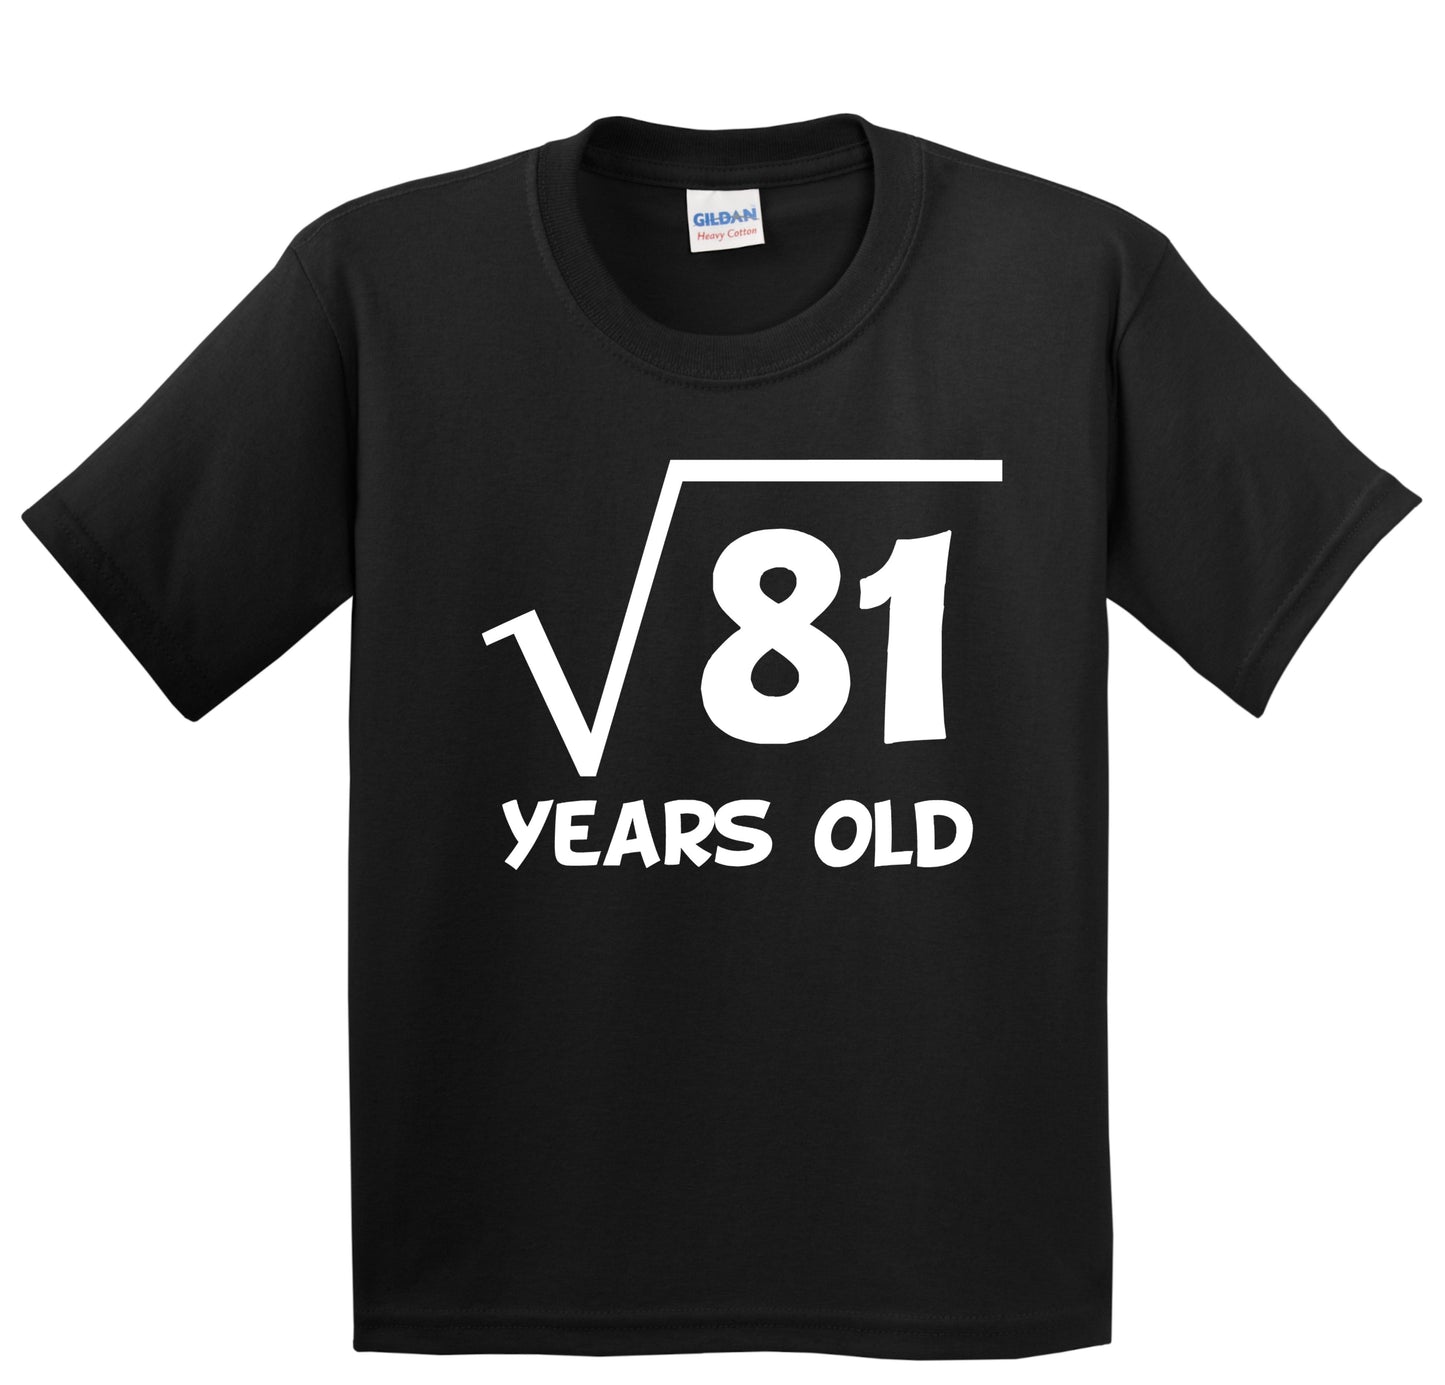 Kids 9th Birthday Shirt Square Root 9 Years Old Math T-Shirt